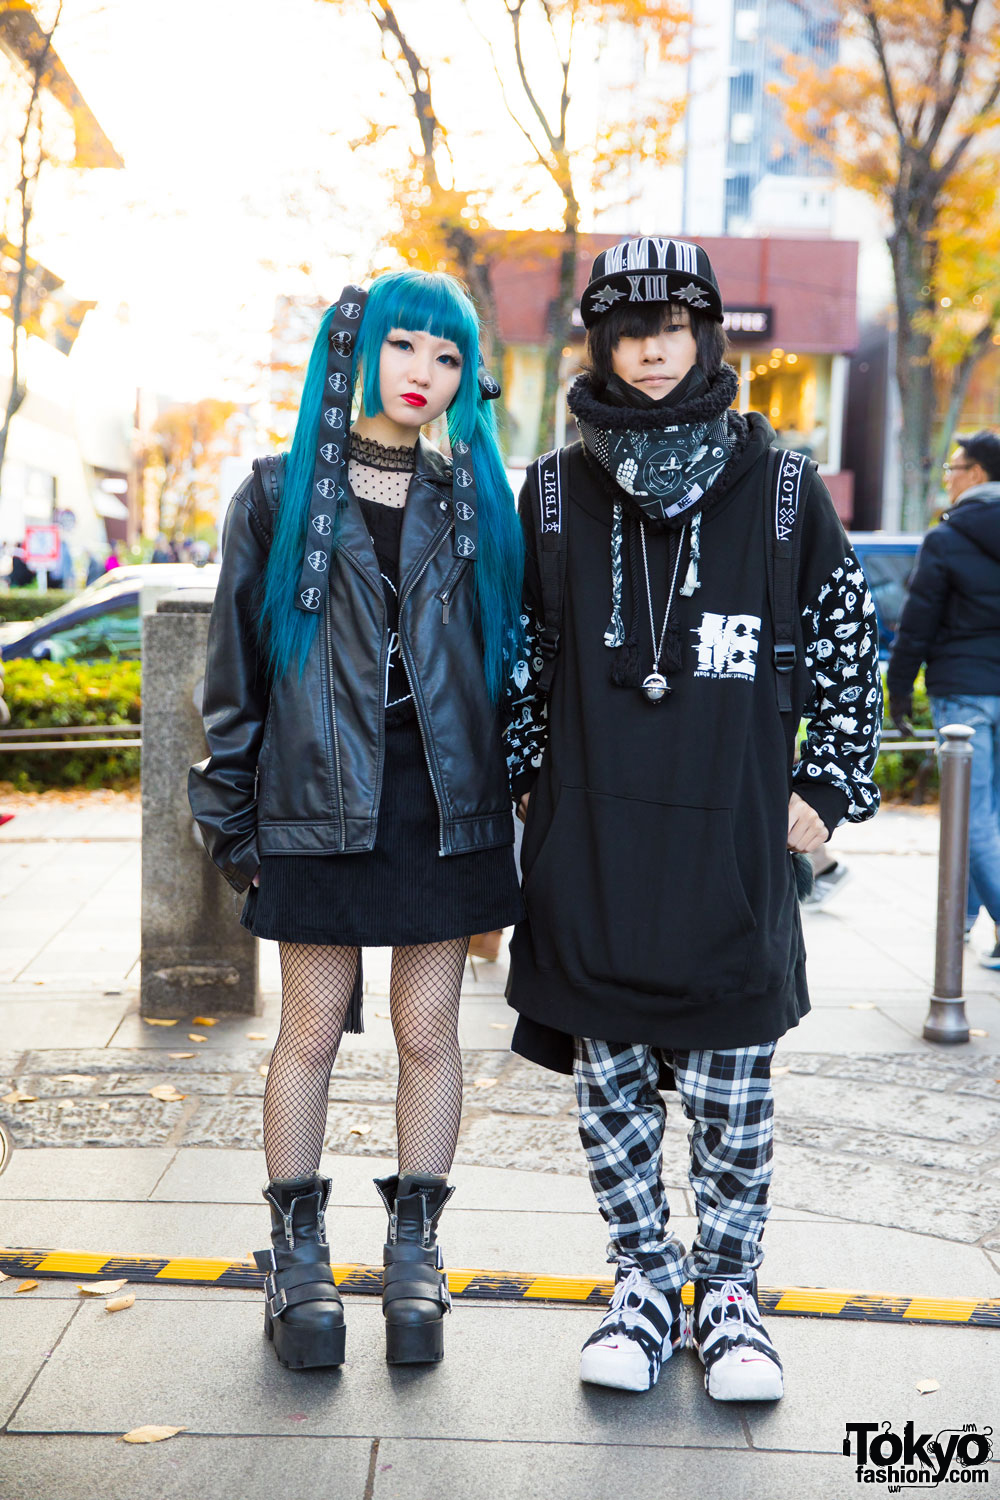 Blue Twin Tails & Harajuku Streetwear Styles by M:E, Morph8ne, Dolls Kill, Long Clothing, KTZ & Vivienne Westwood